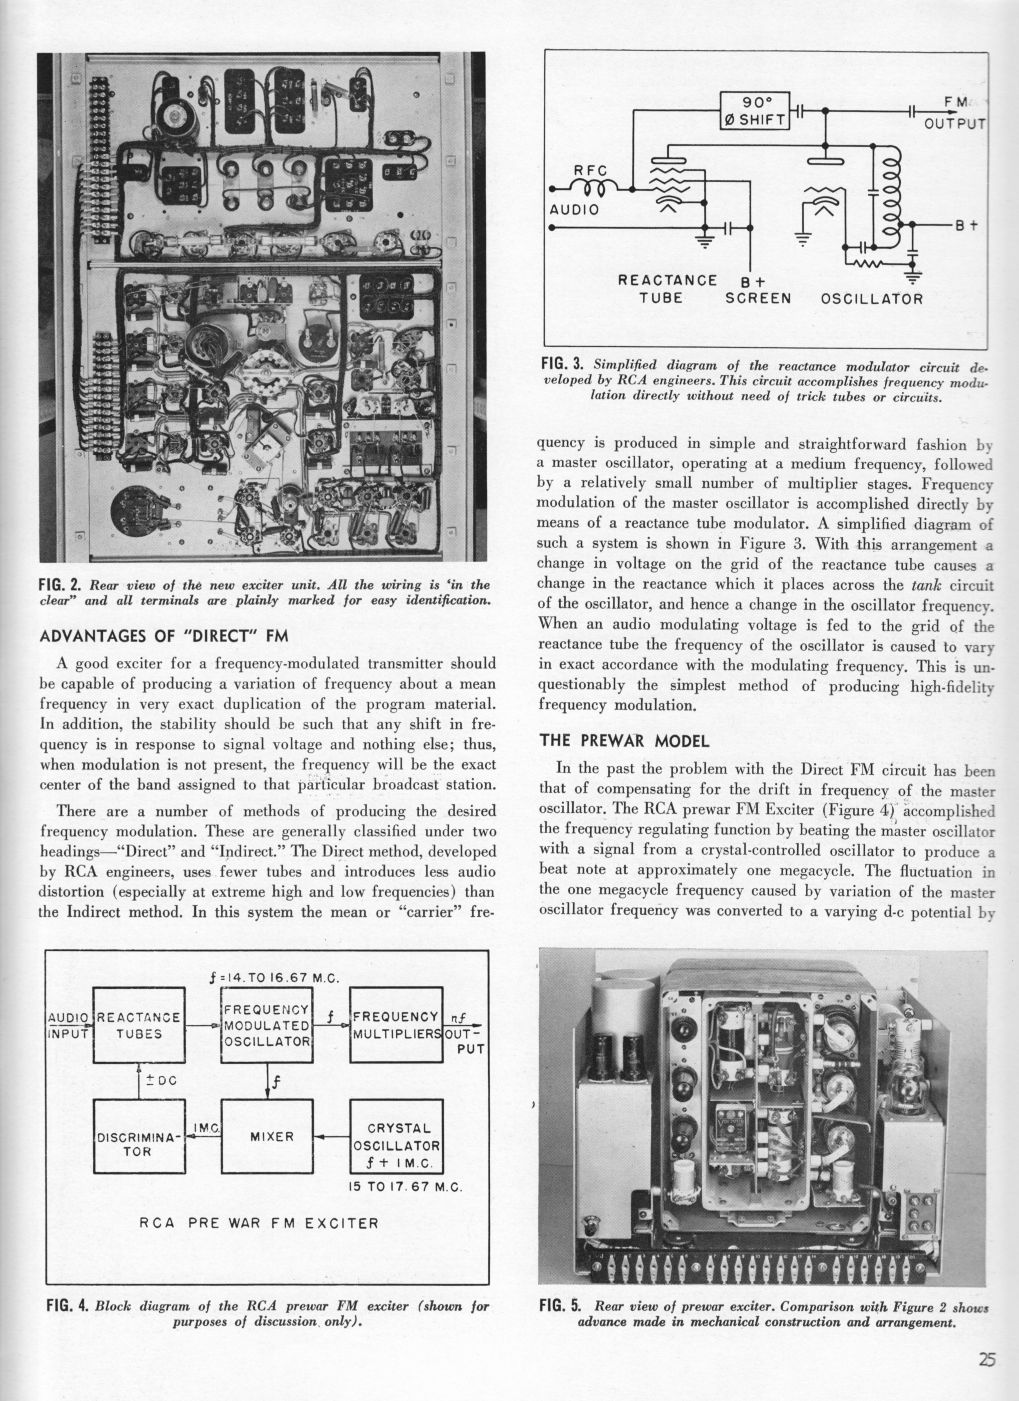 RCA MI-7015 Direct FM Exciter, page 2